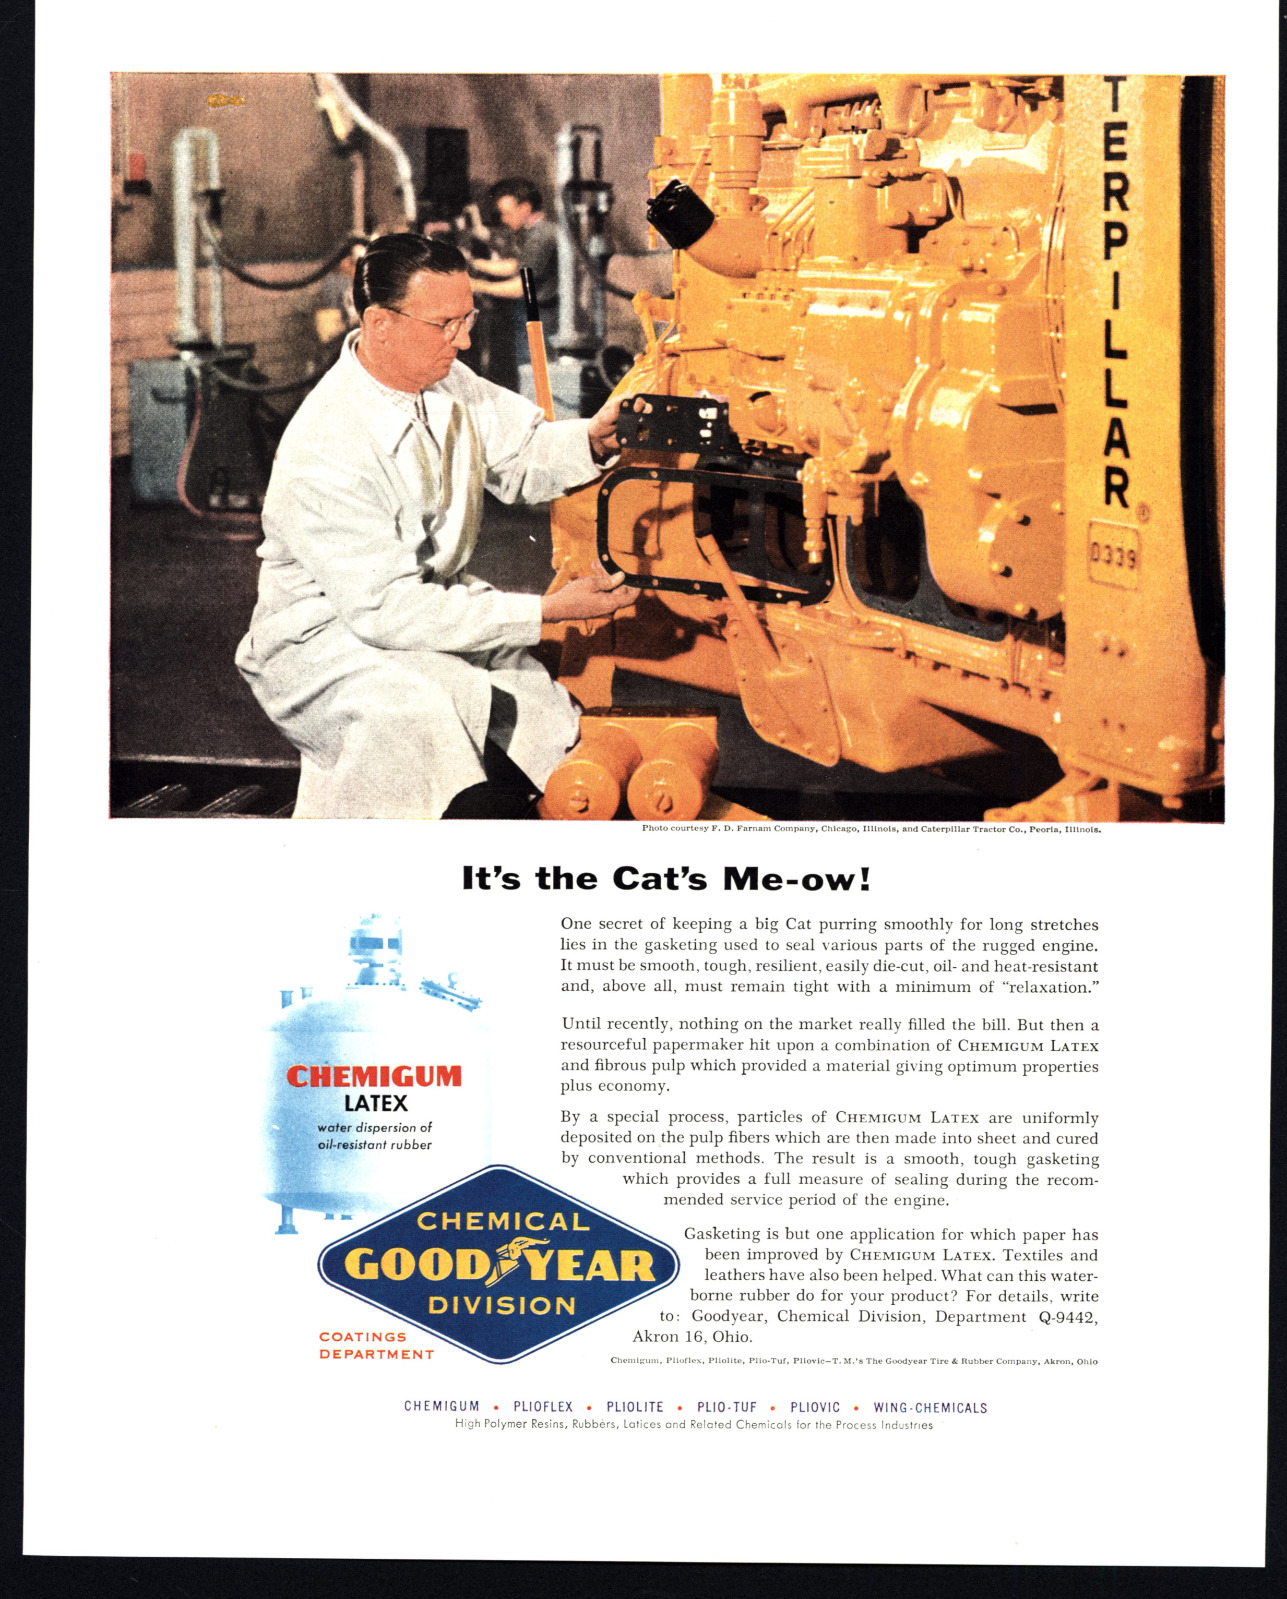 1956 PRINT AD CHEMICAL GOODYEAR CHEMIGUM LATEX CATERPILLAR